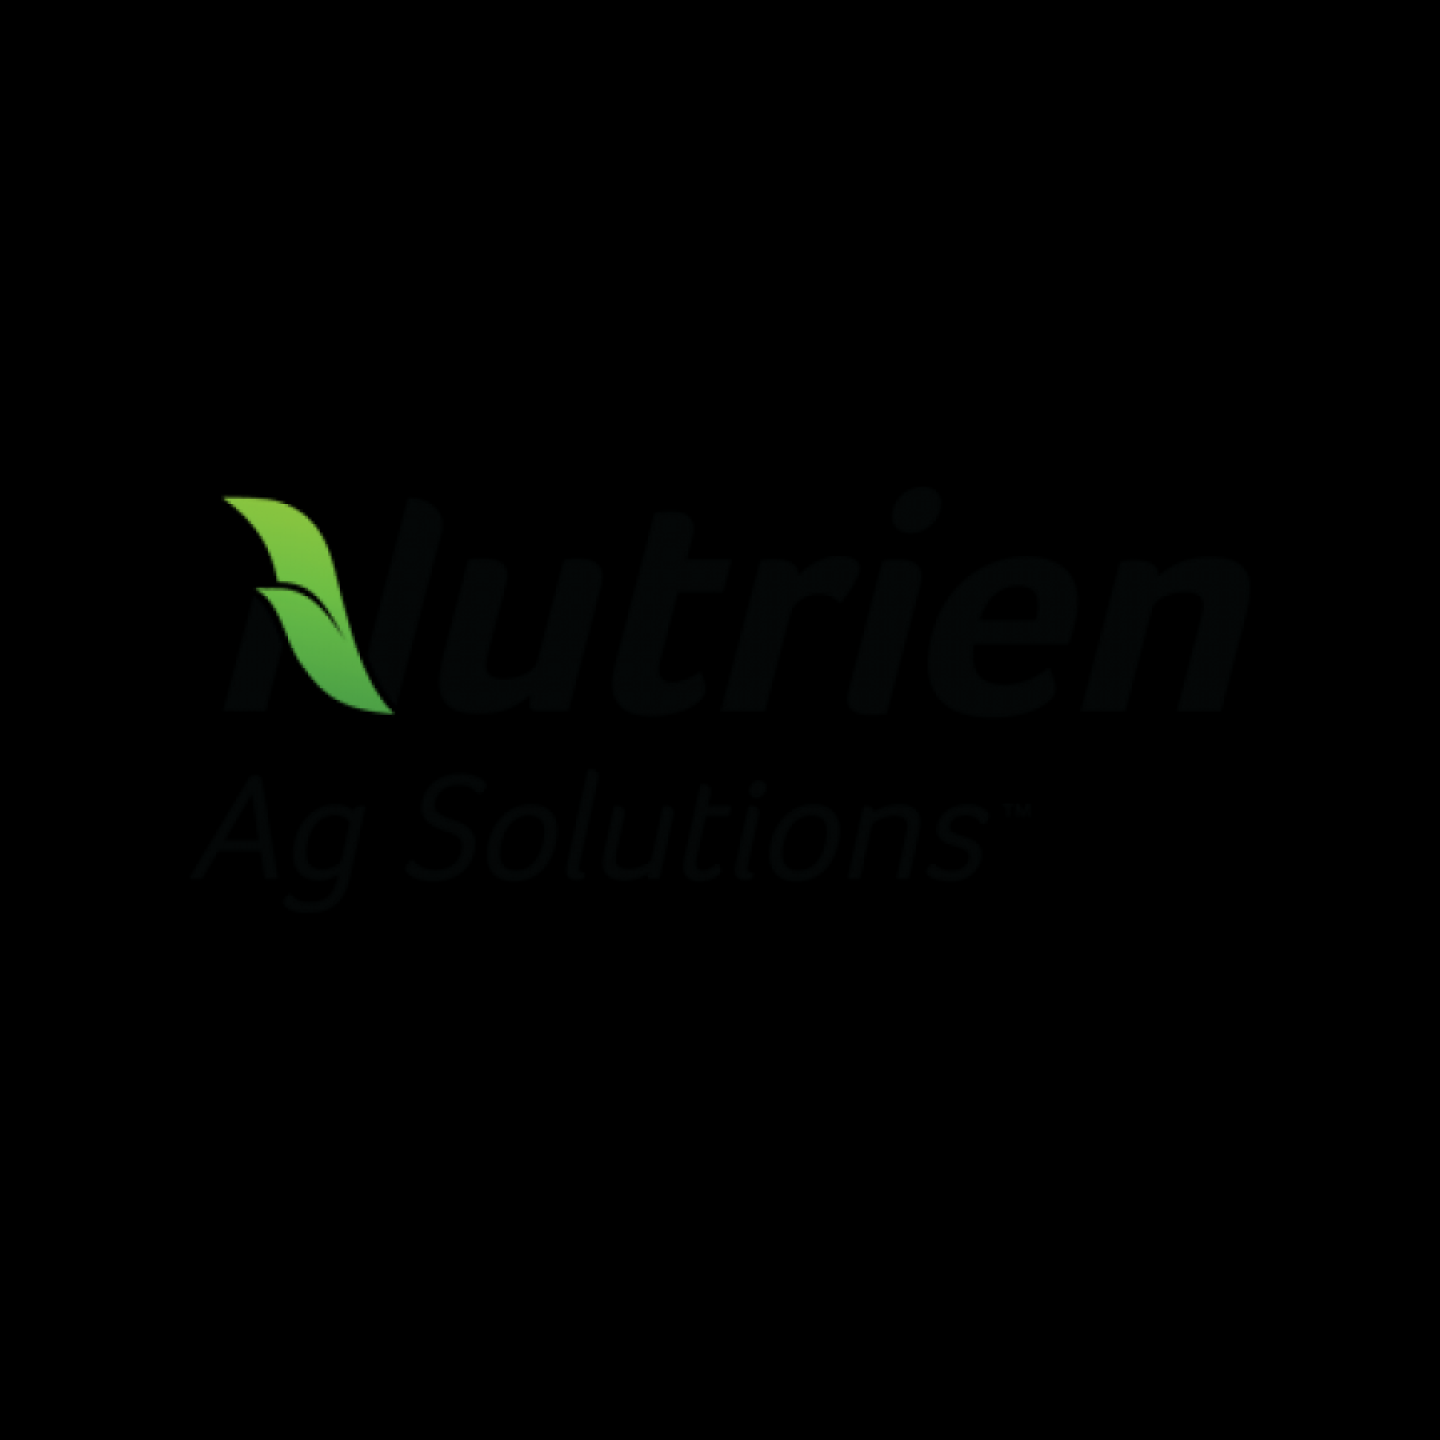 nutrien ag solutions